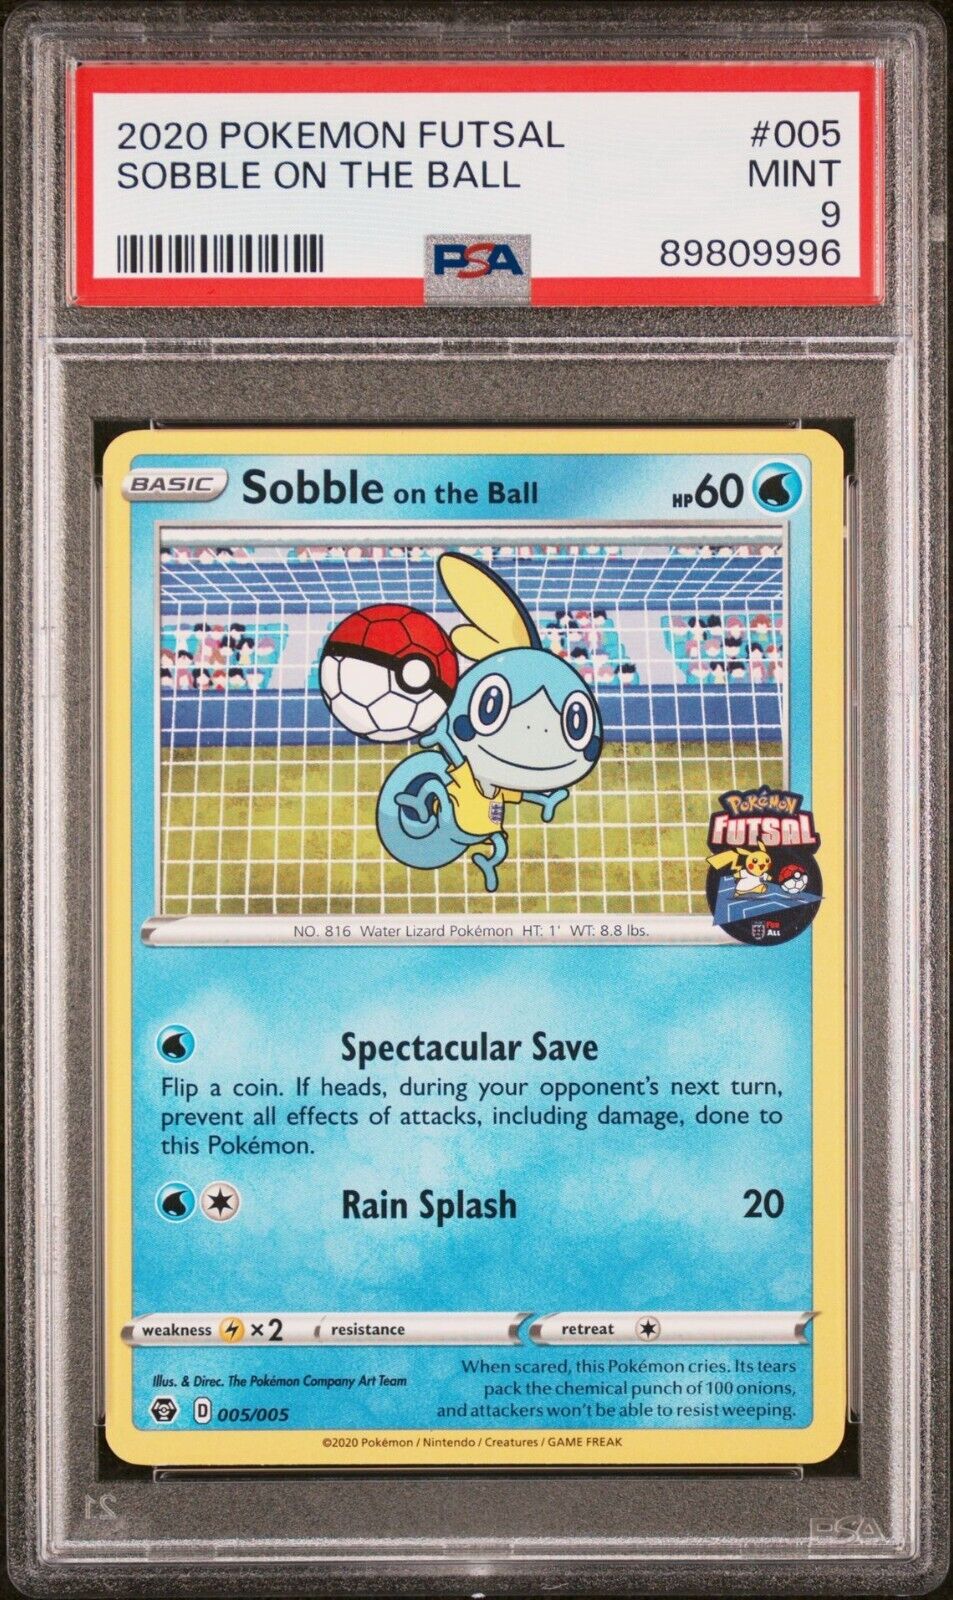 PSA 9 Sobble On The Ball 005/005 Futsal Promo - MINT Pokemon Card